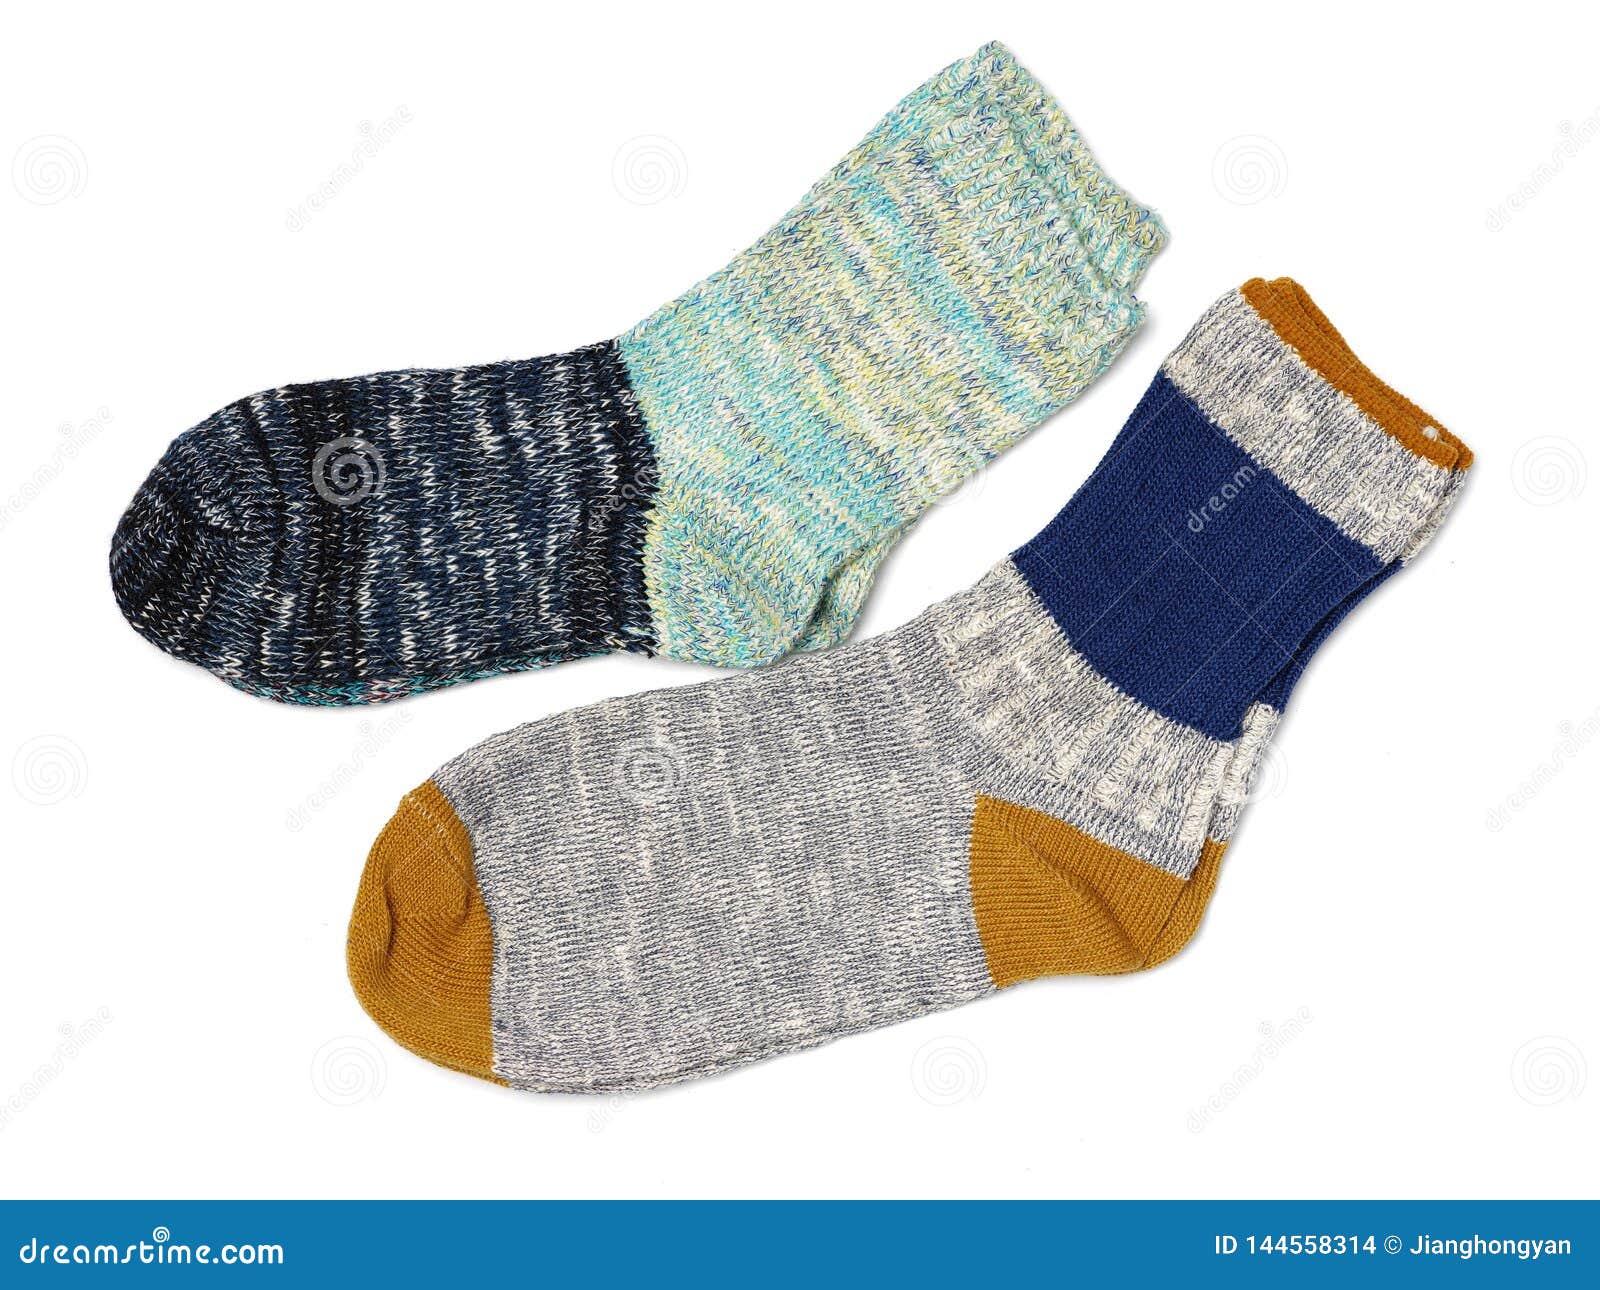 Colorful Sock on White Background Stock Photo - Image of beautiful ...